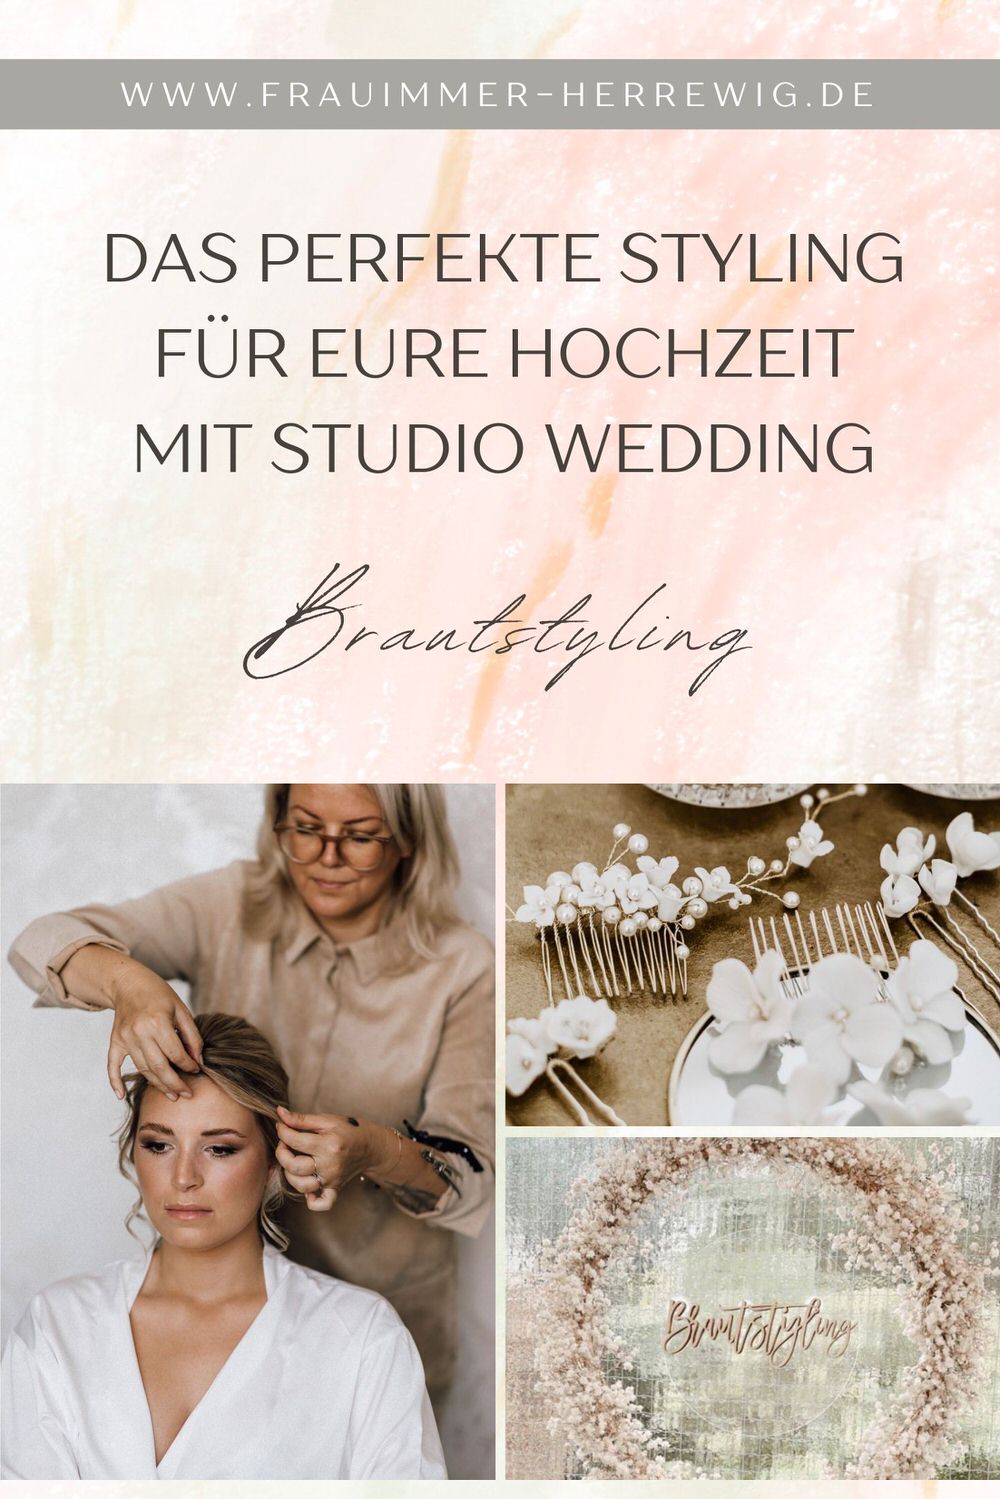 Brautstyling studio wedding – gesehen bei frauimmer-herrewig.de